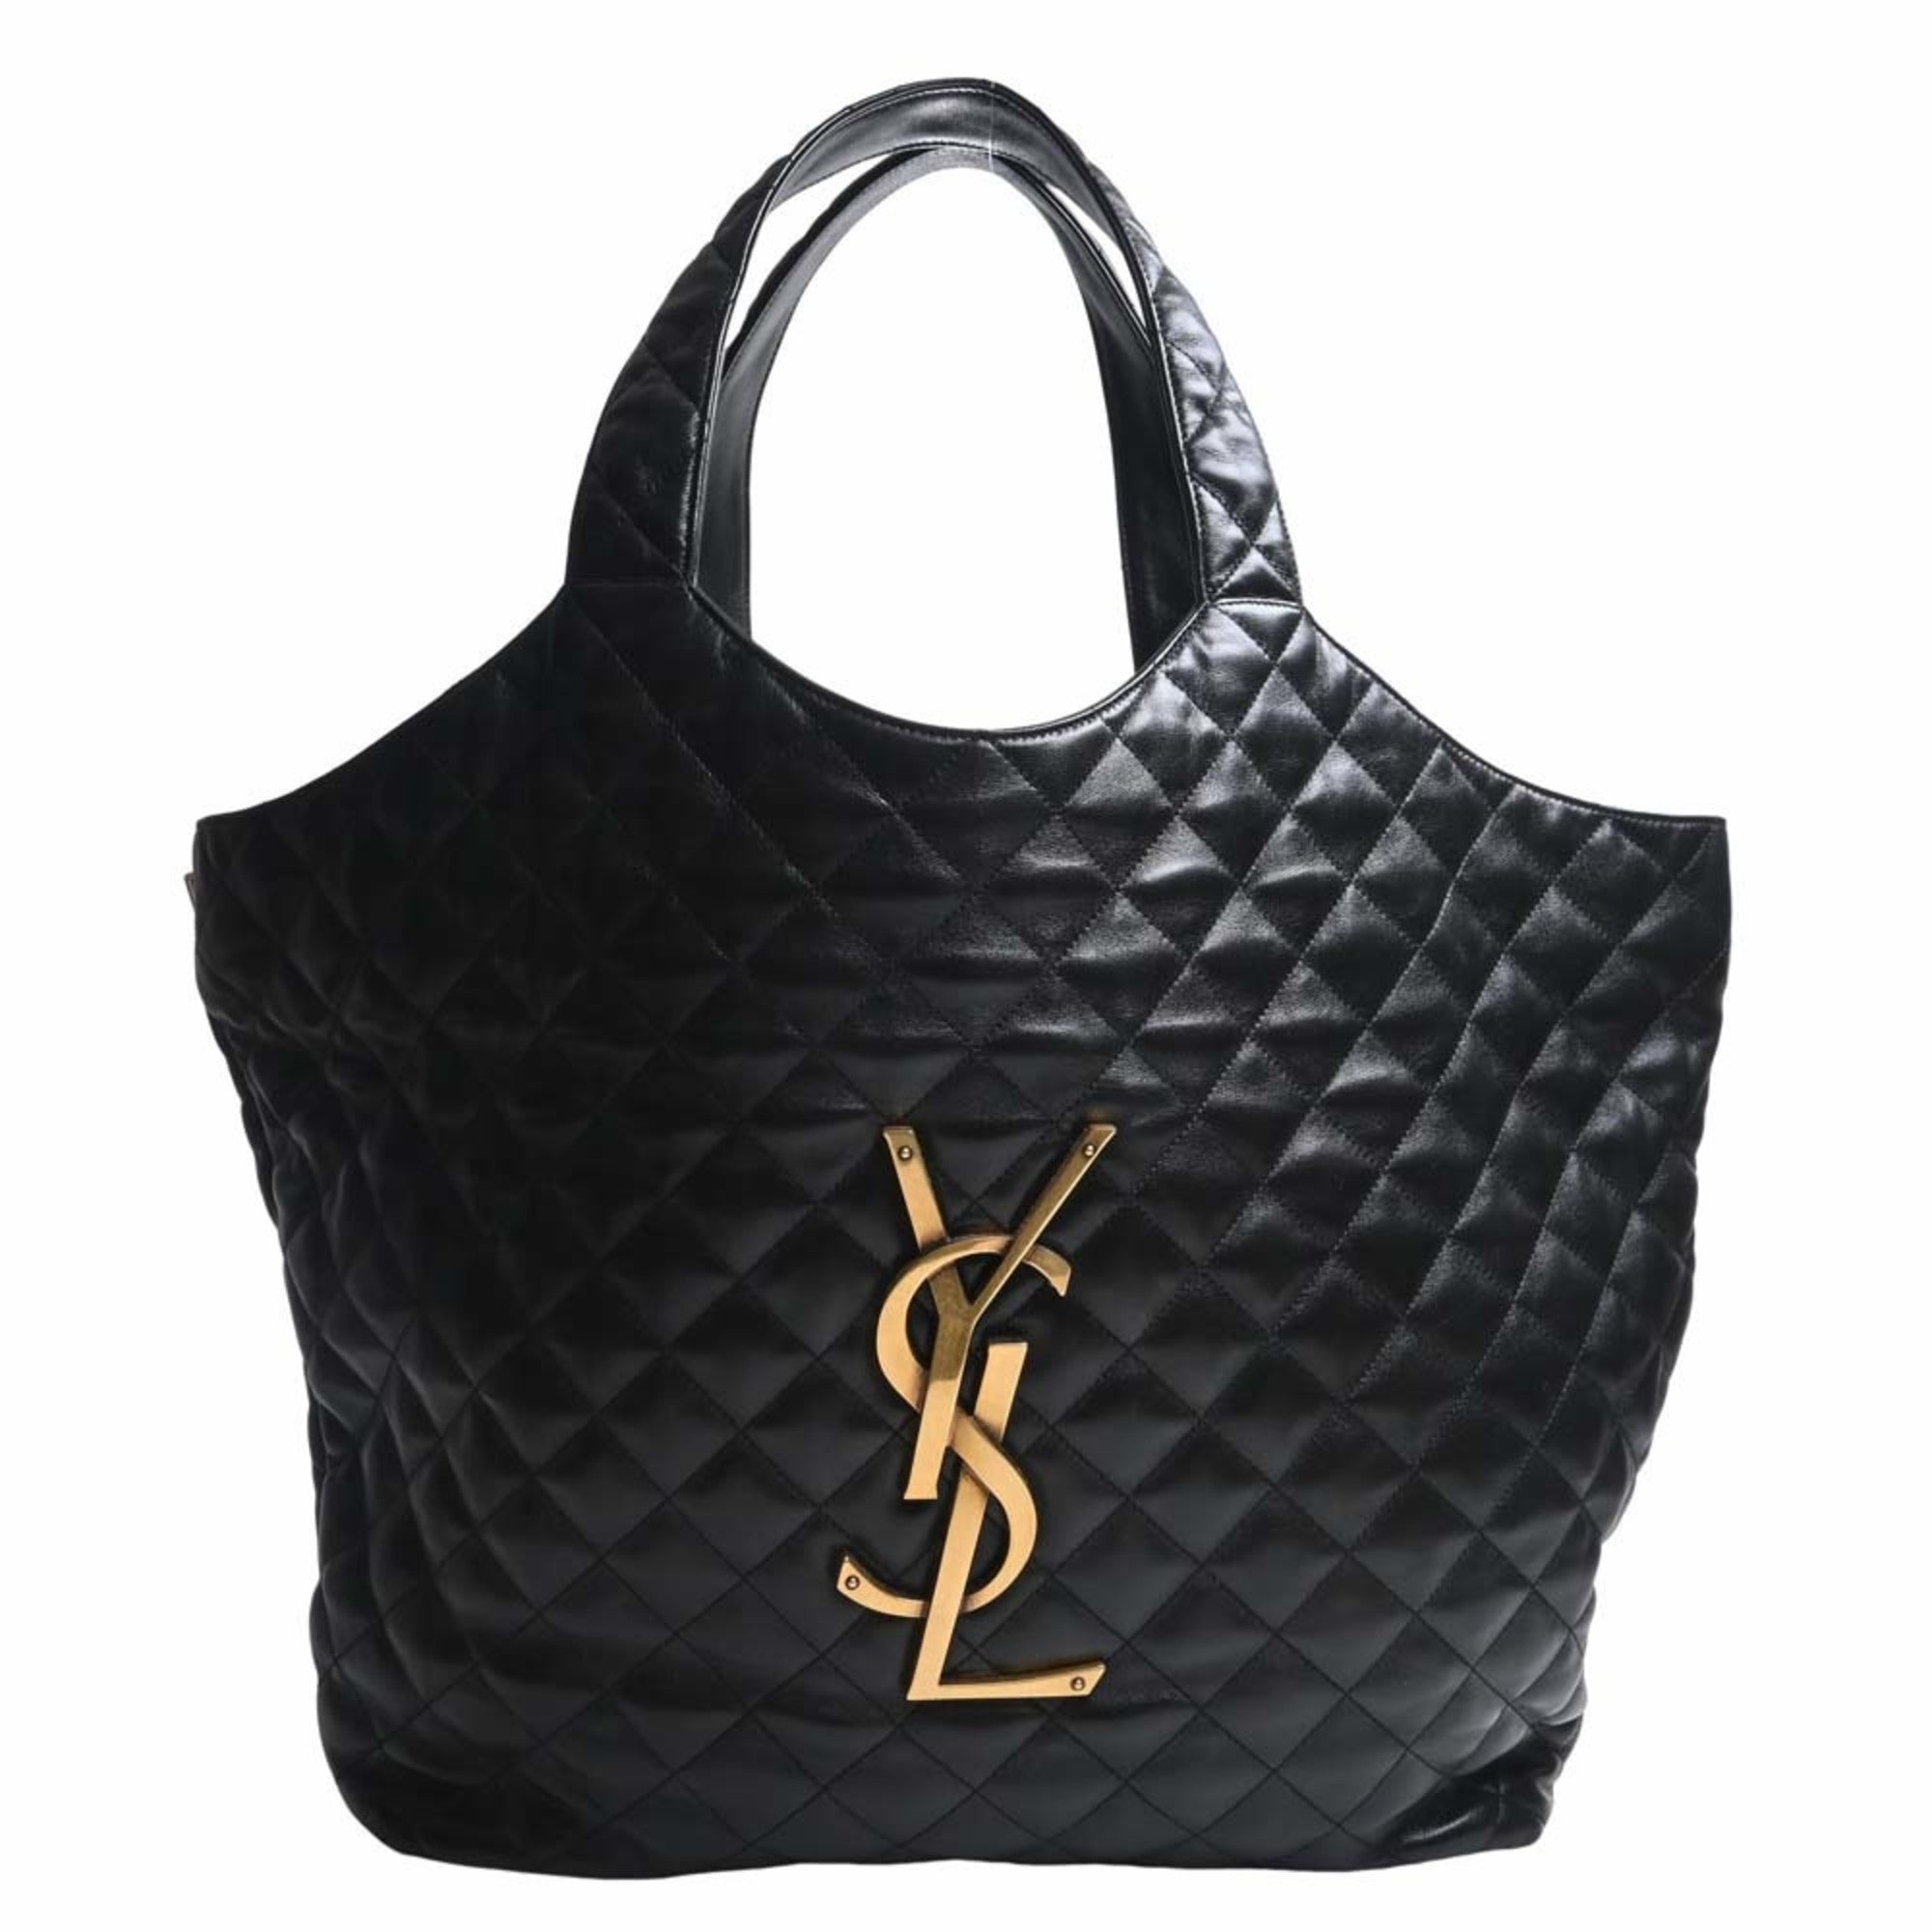 Leather Icar Maxi Bag Tote 698651 Black Ladies